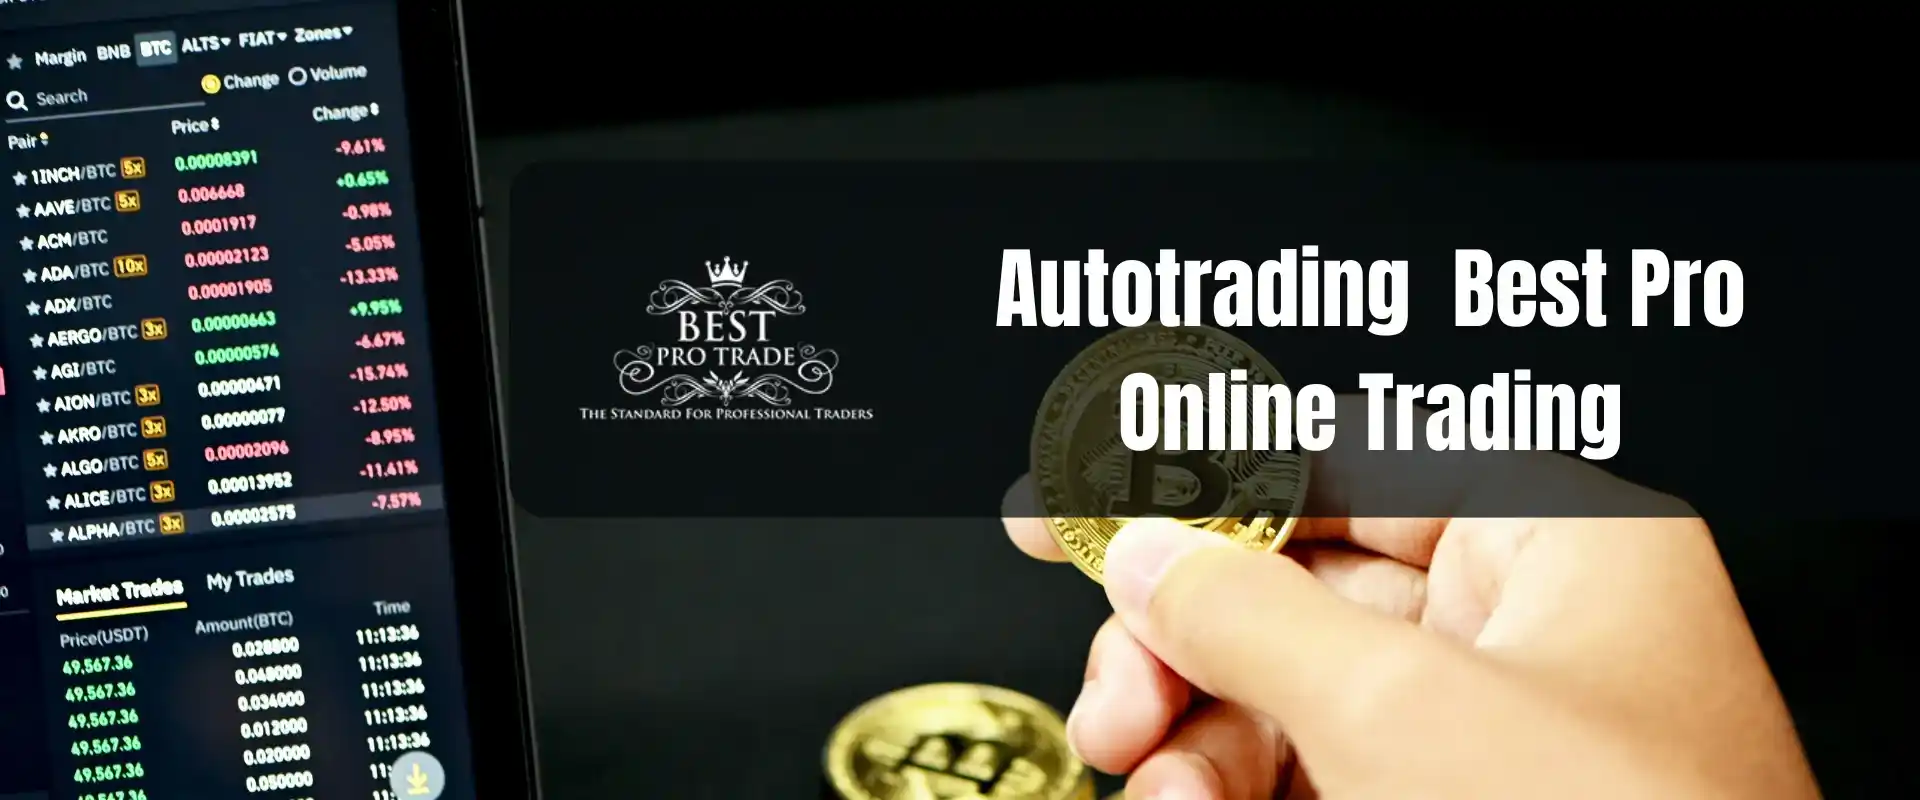 online Trading